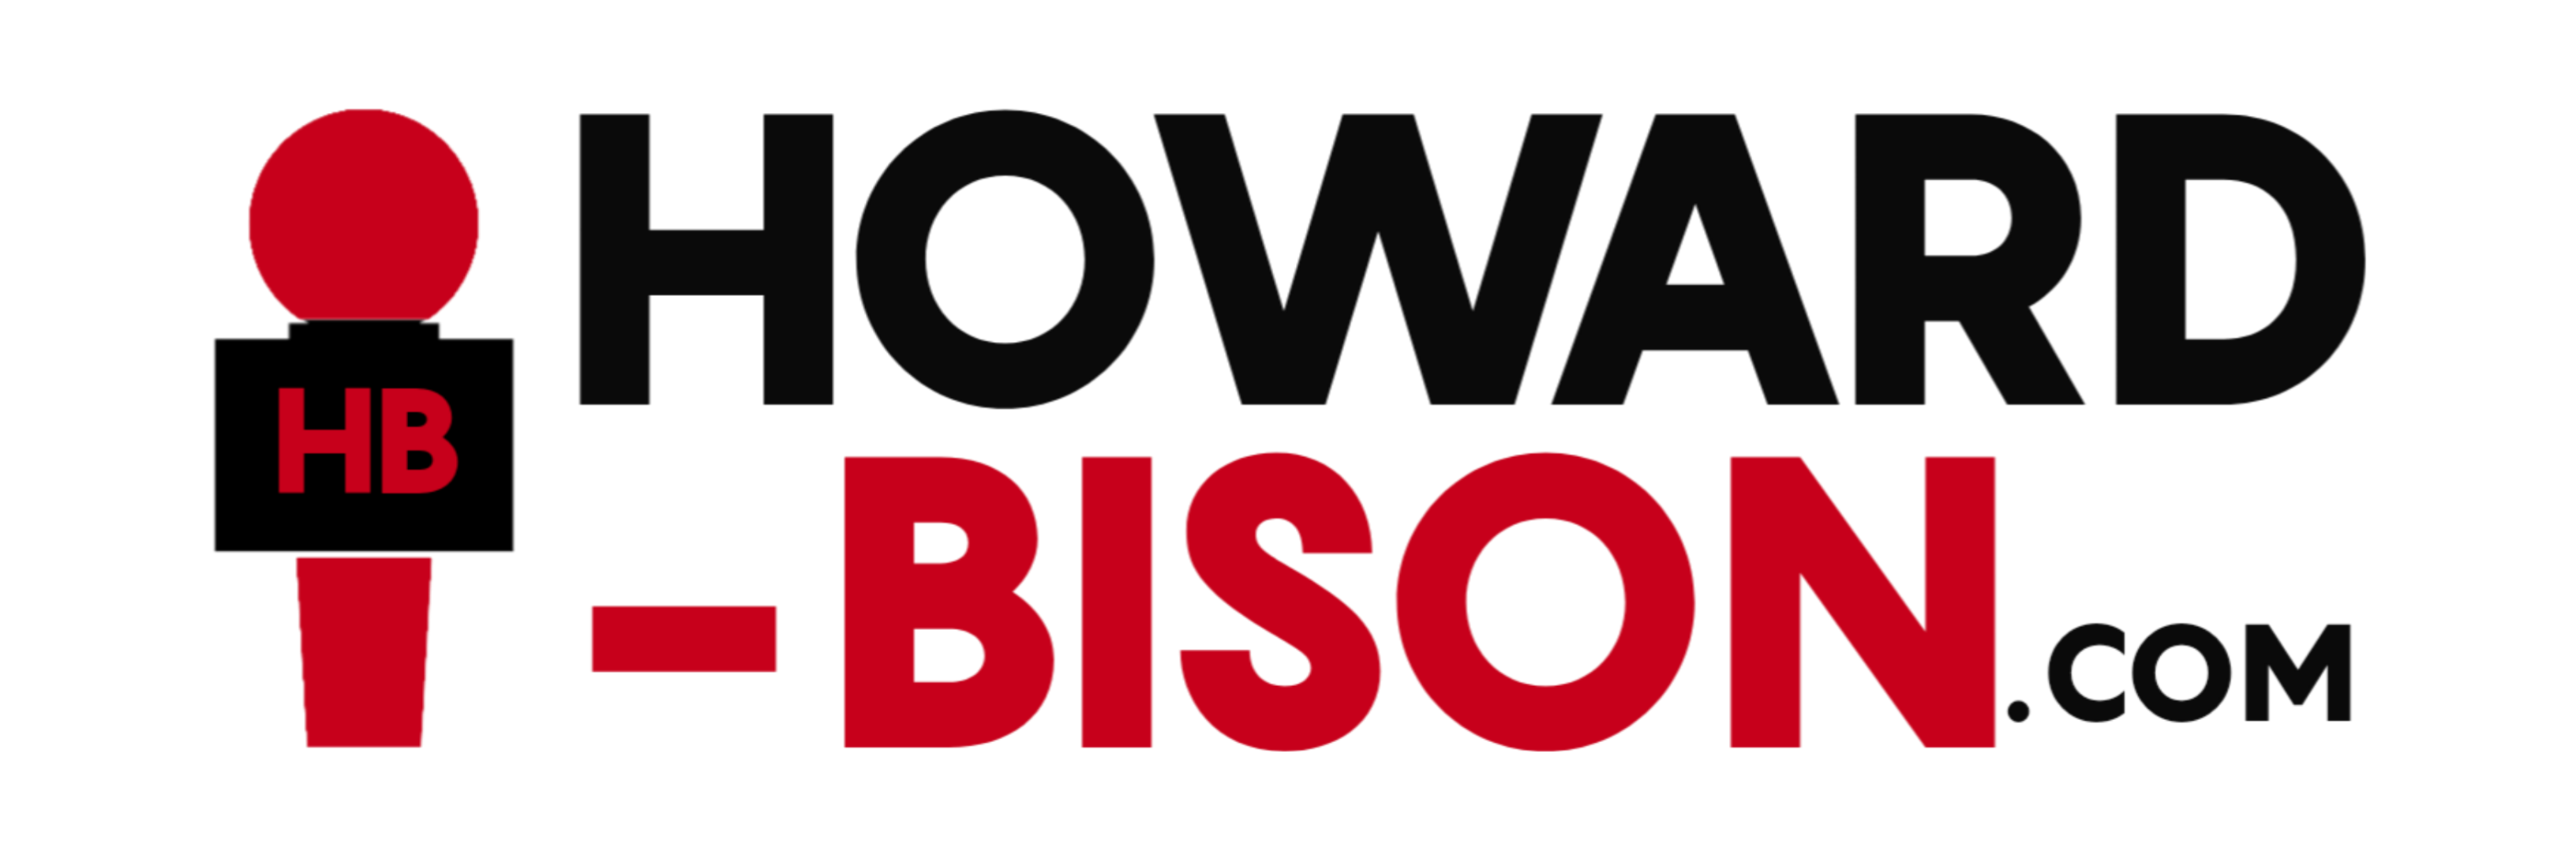 Howard University Bison